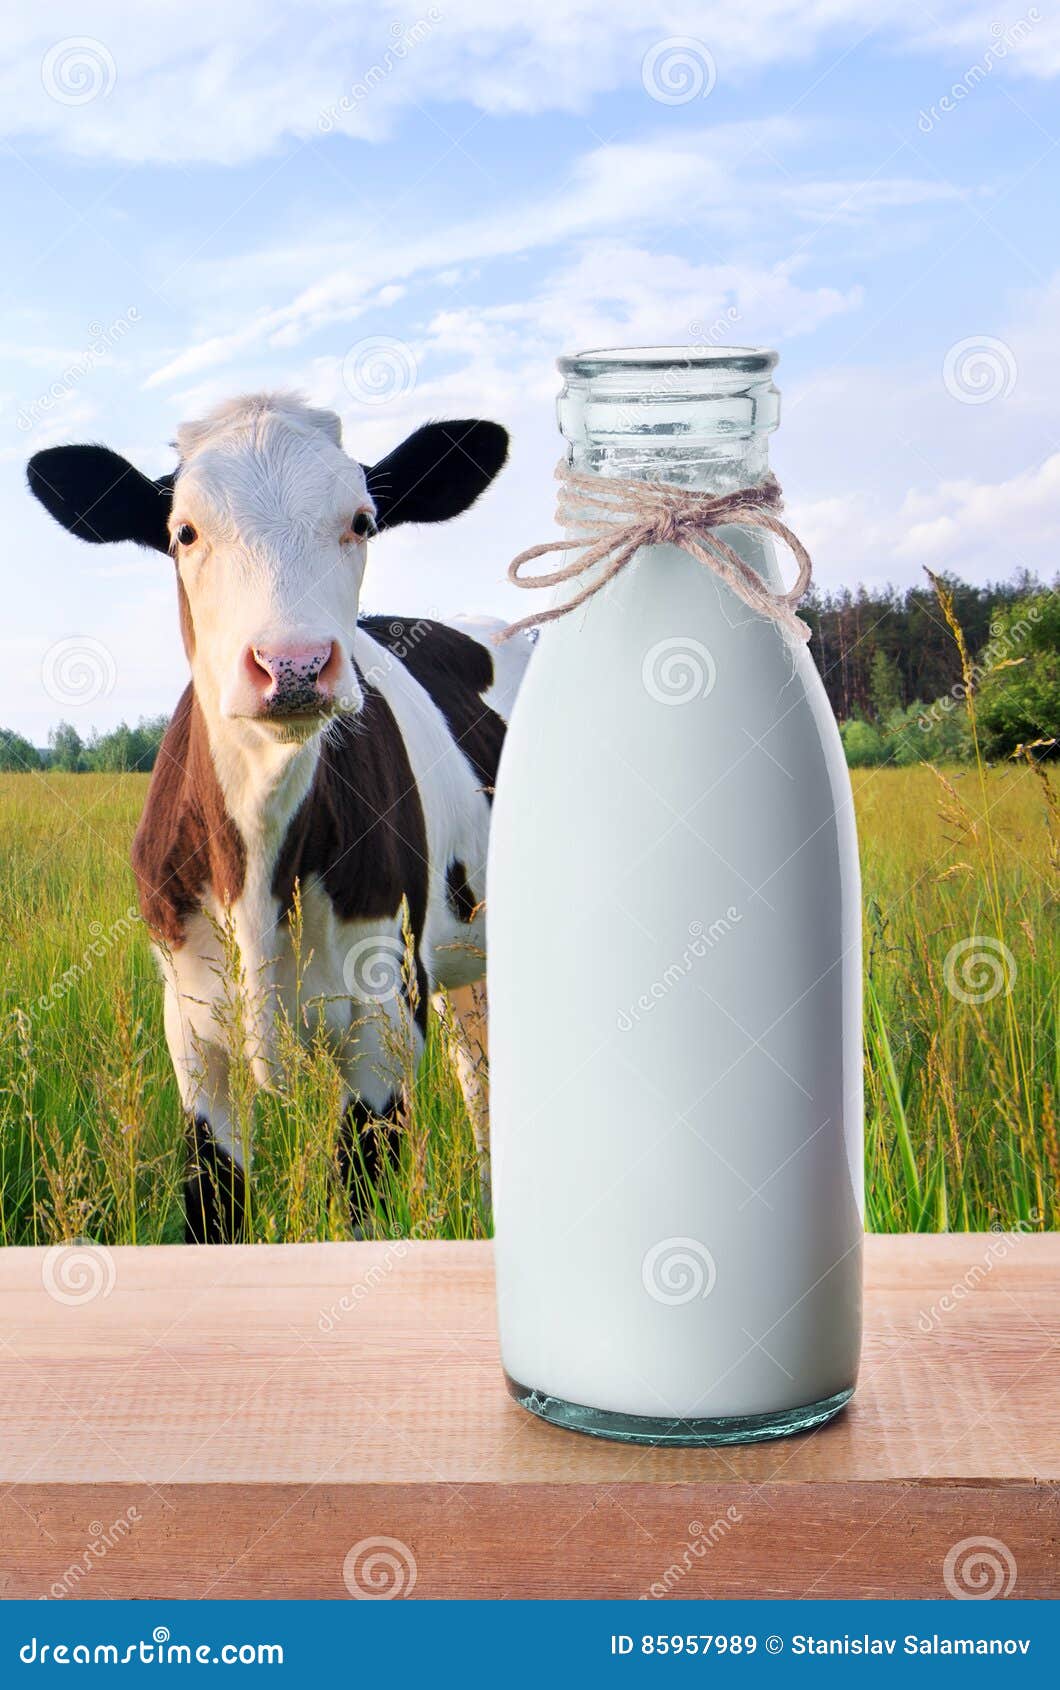 Бутылка молока буренка раньше вмещала. Корова молоко. Молоко домашнее. Молоко коровье деревенское. Корова с бутылкой молока.